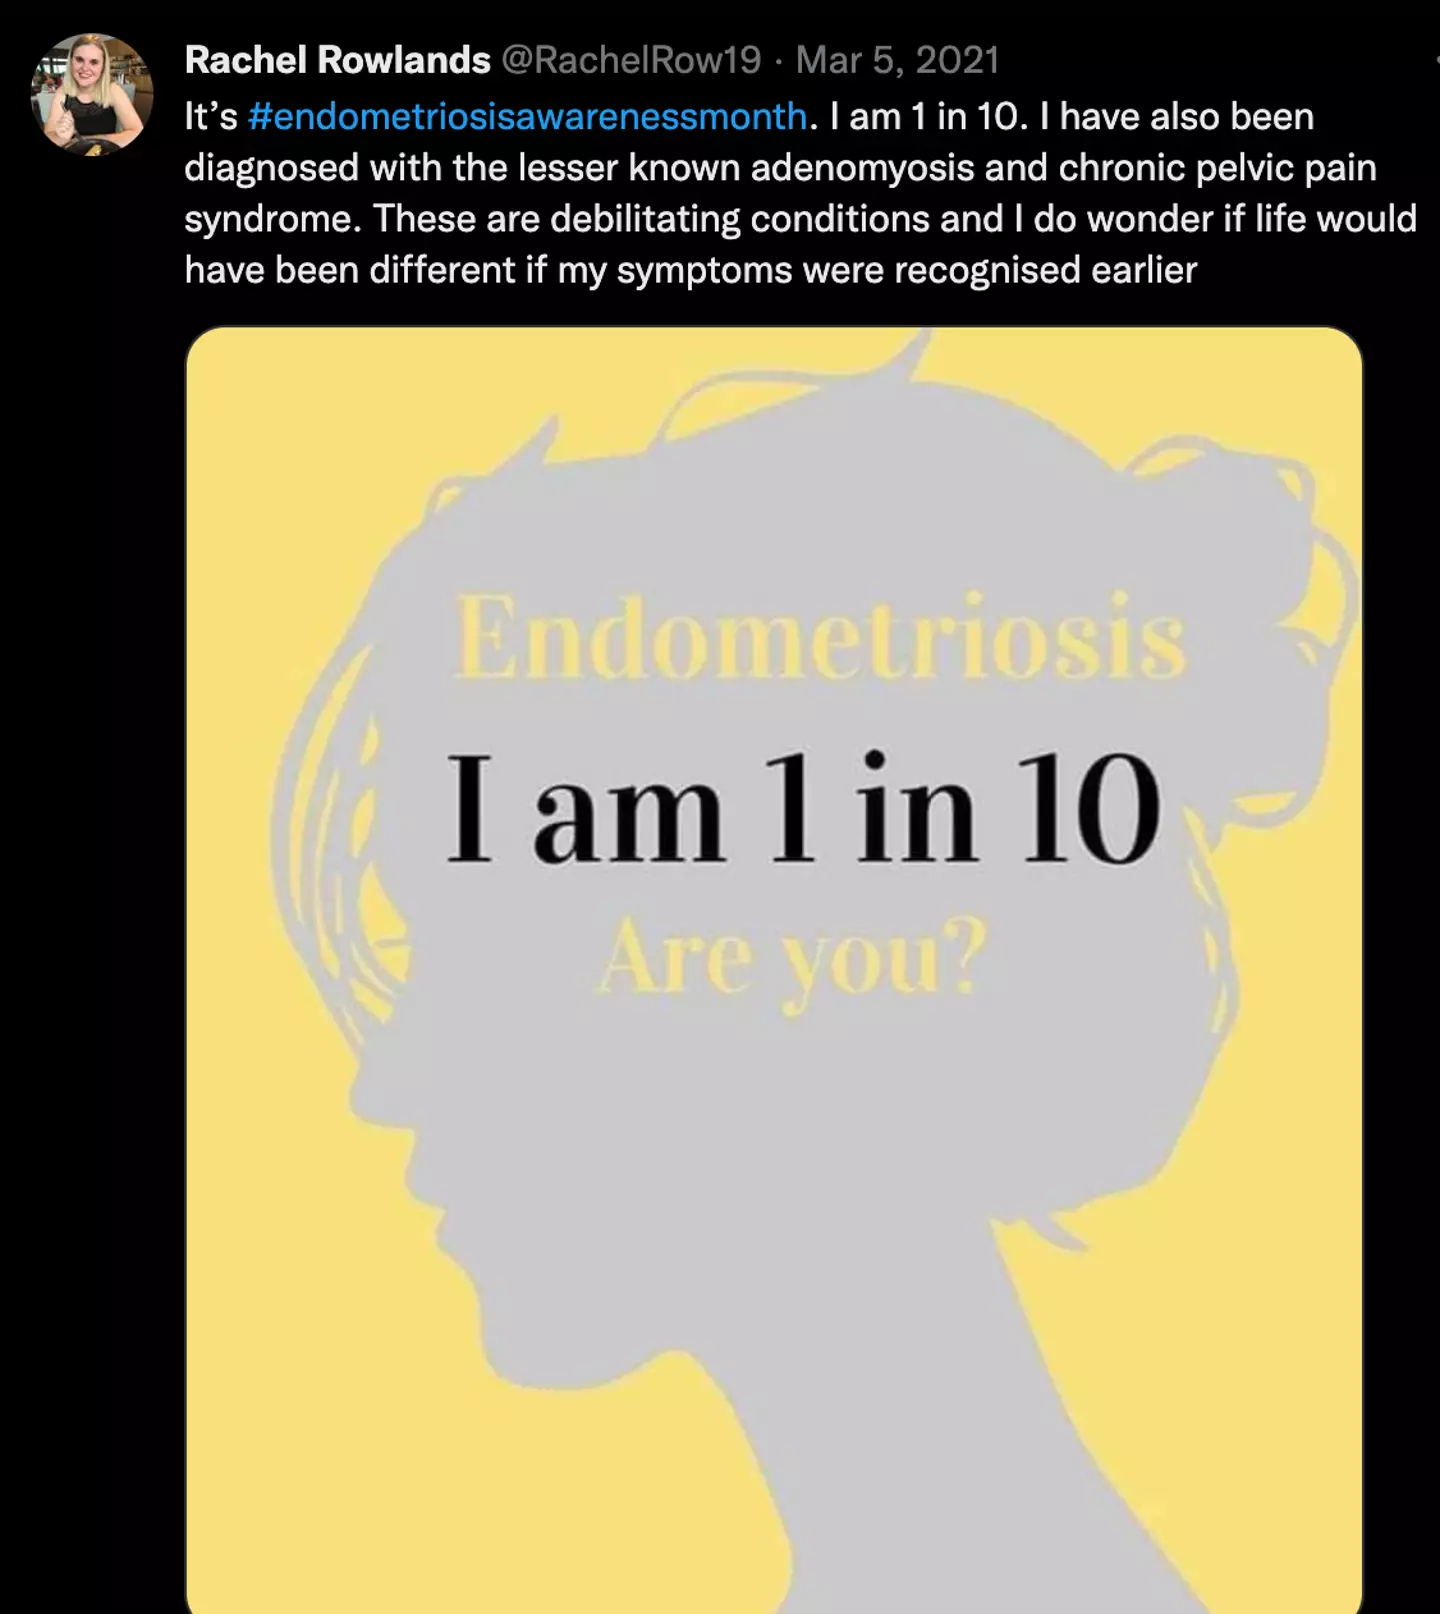 Rowlands has endometriosis and chronic pelvic pain condition.